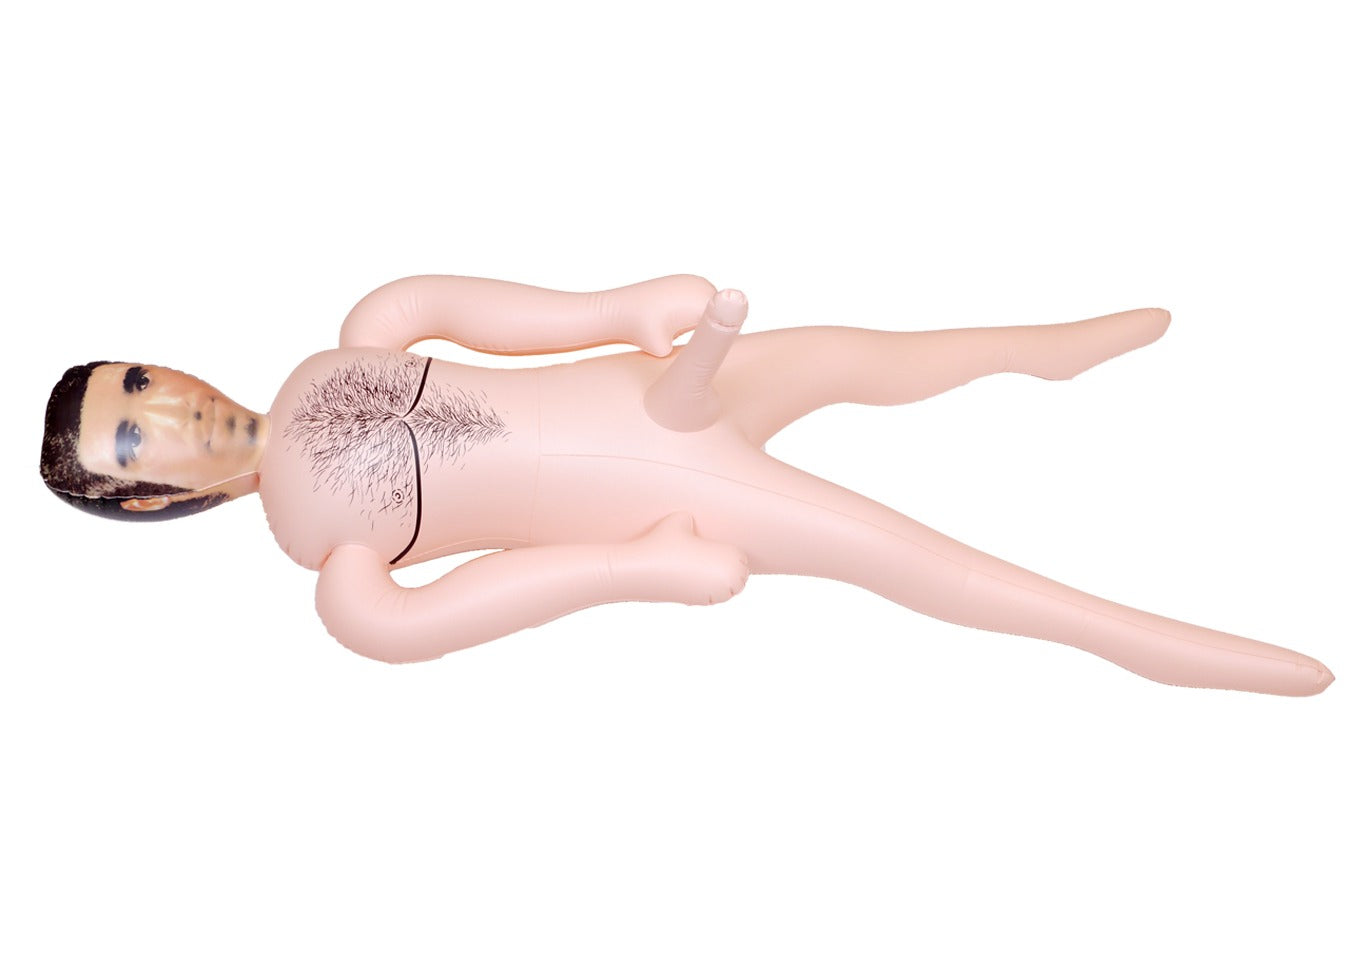 Bossoftoys Boss Male Blow Up Love Doll - 150 cm - Inflatable Masturbator - 59-00008